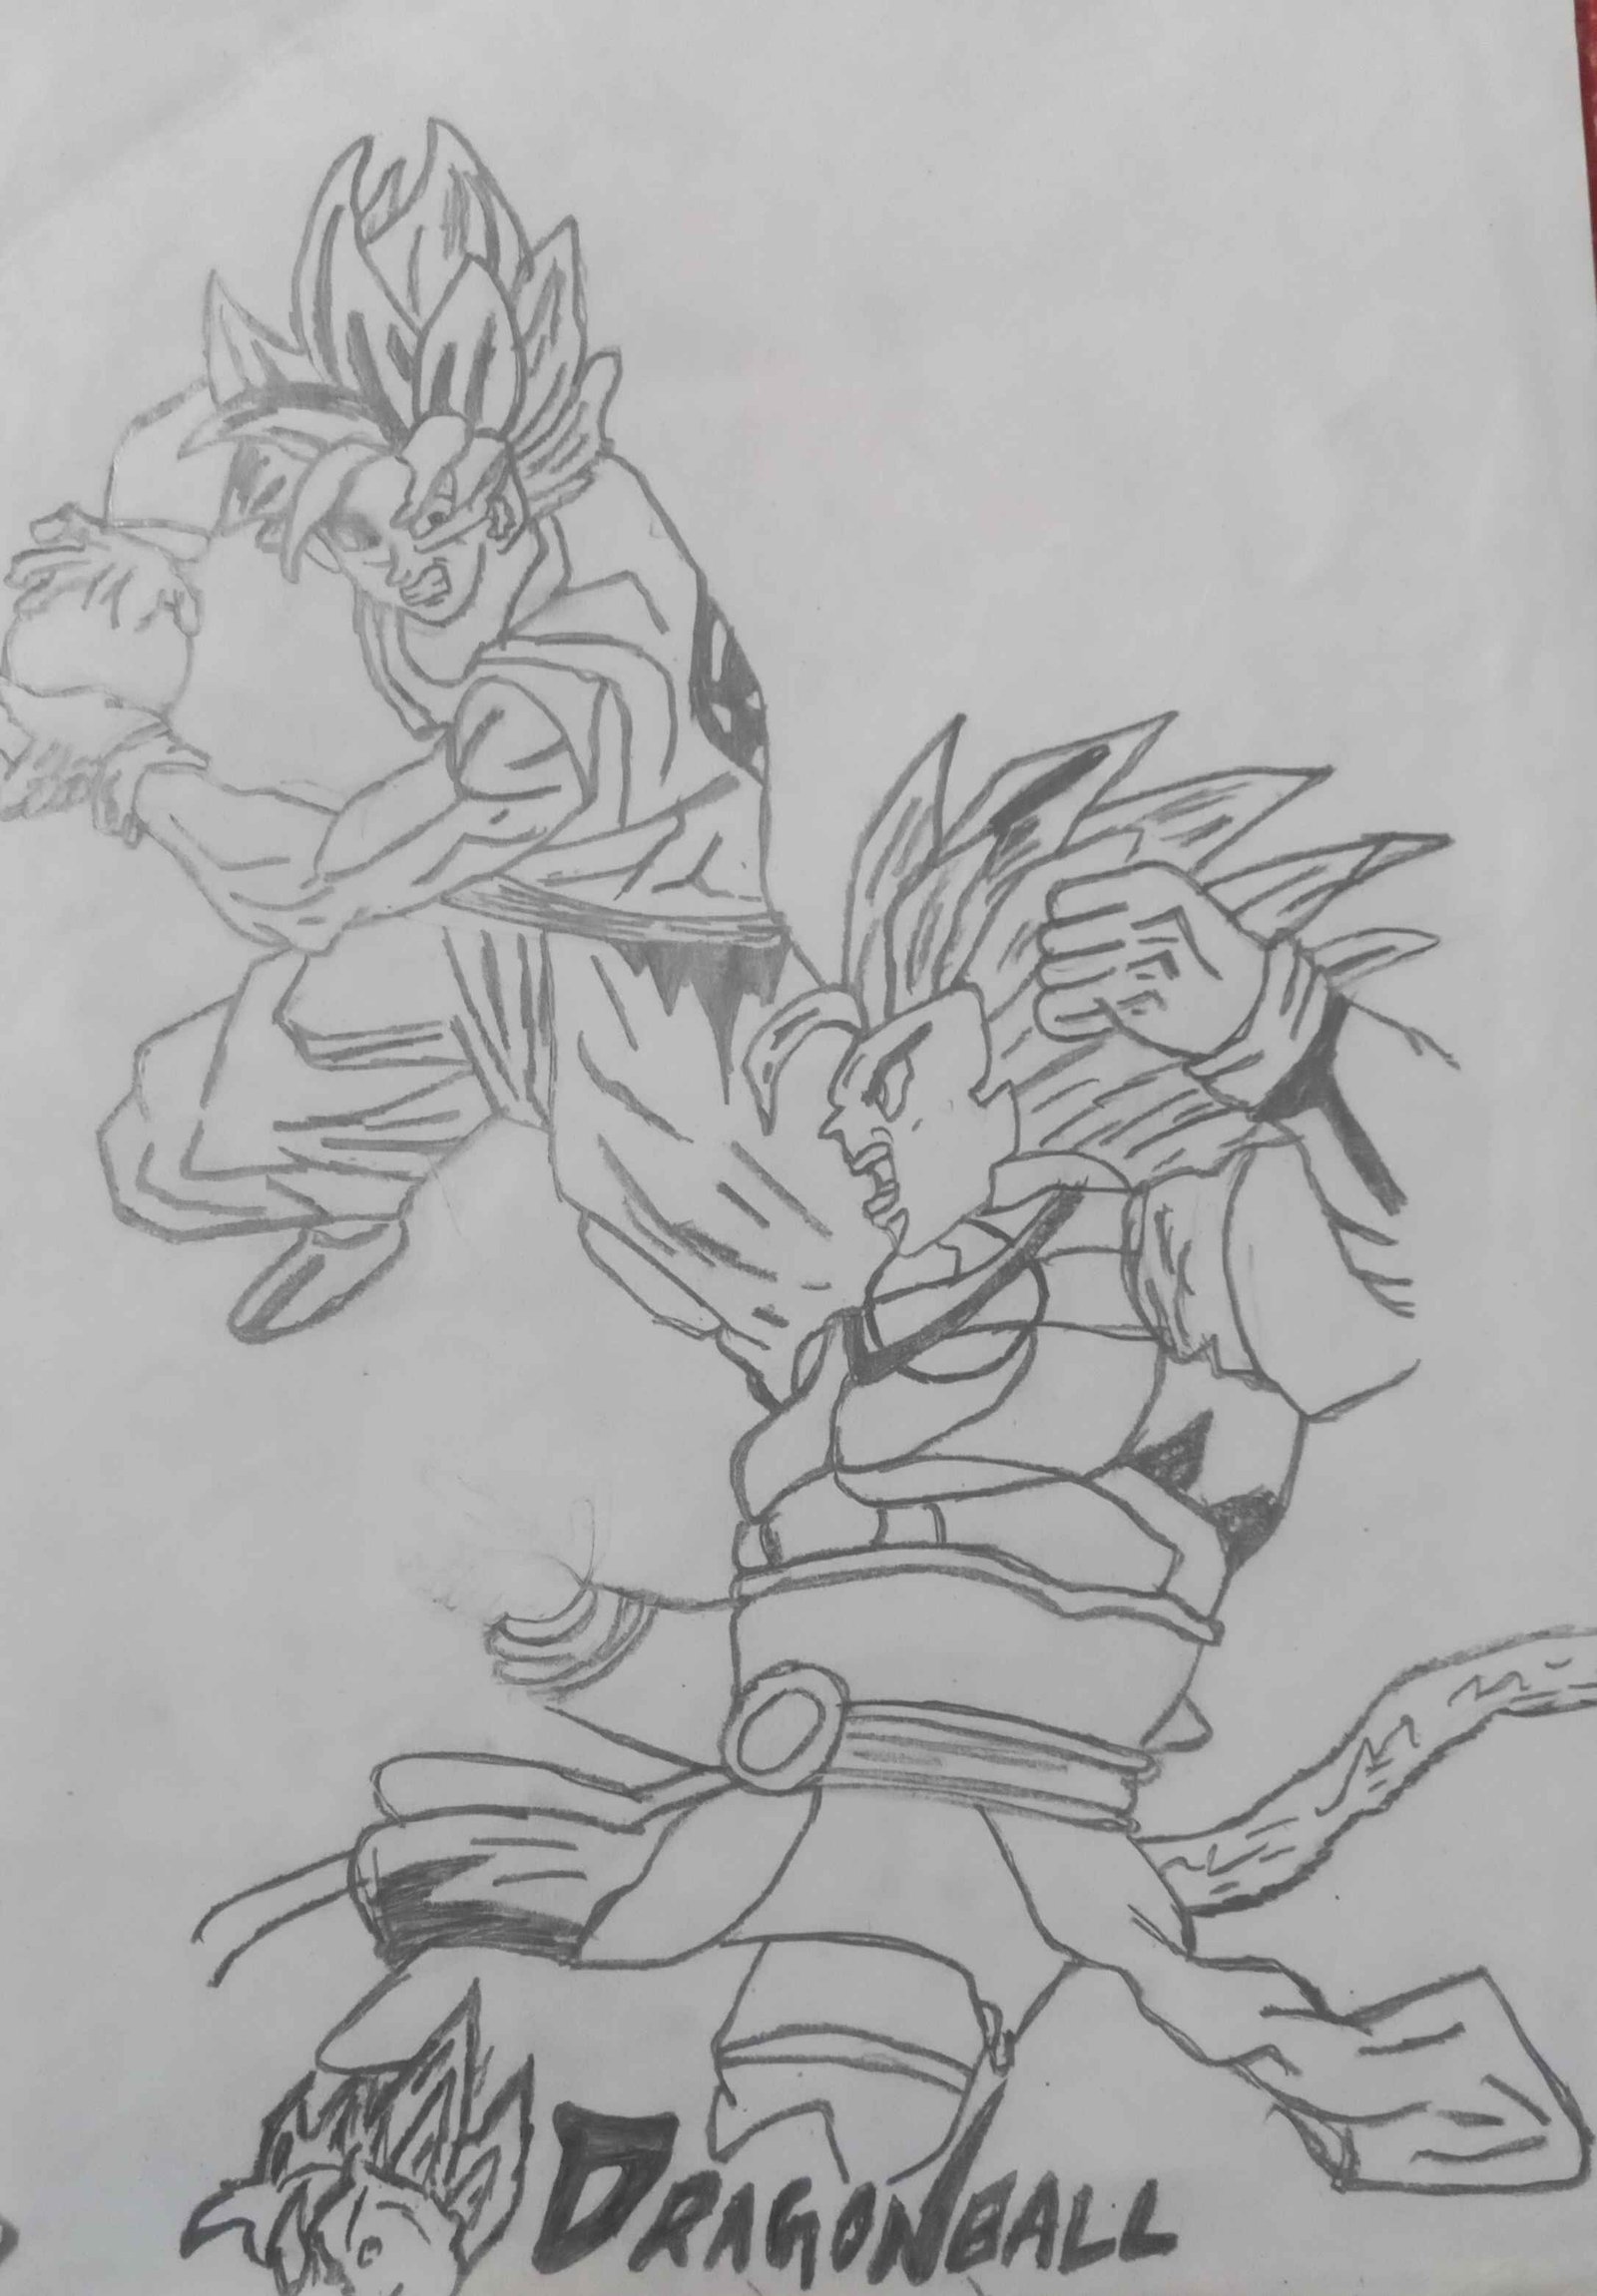 Goku and Vegeta Coloring Page - ColoringAll